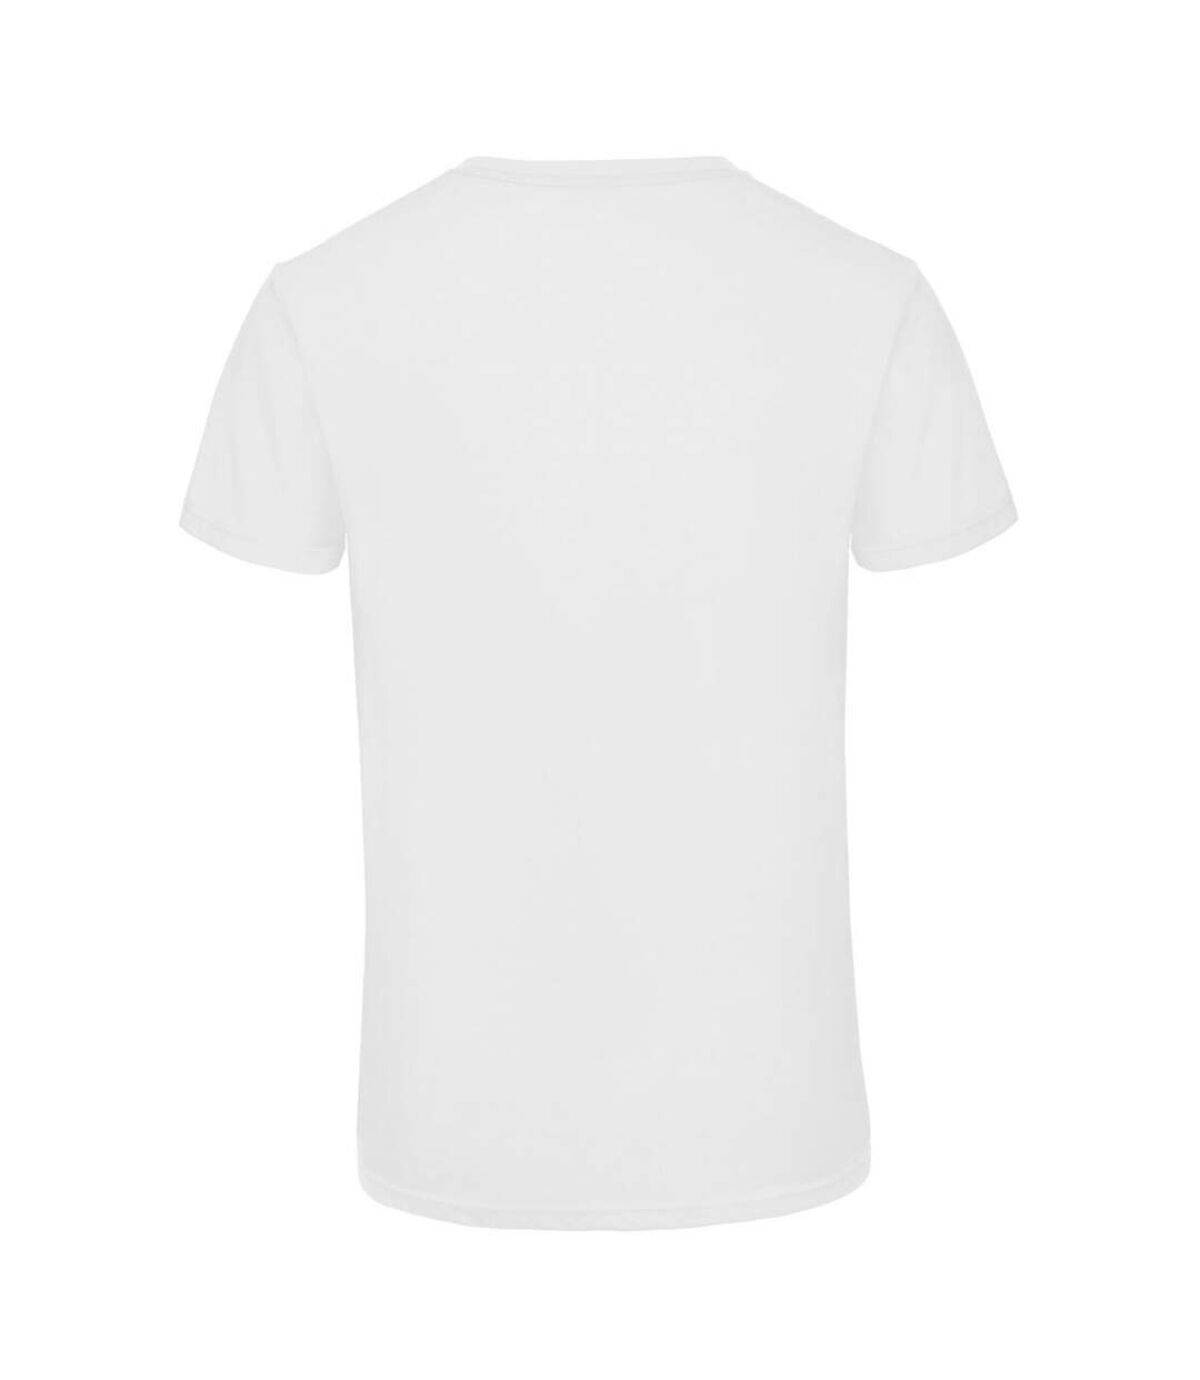 B&C Favourite - T-shirt - Homme (Blanc) - UTBC3638